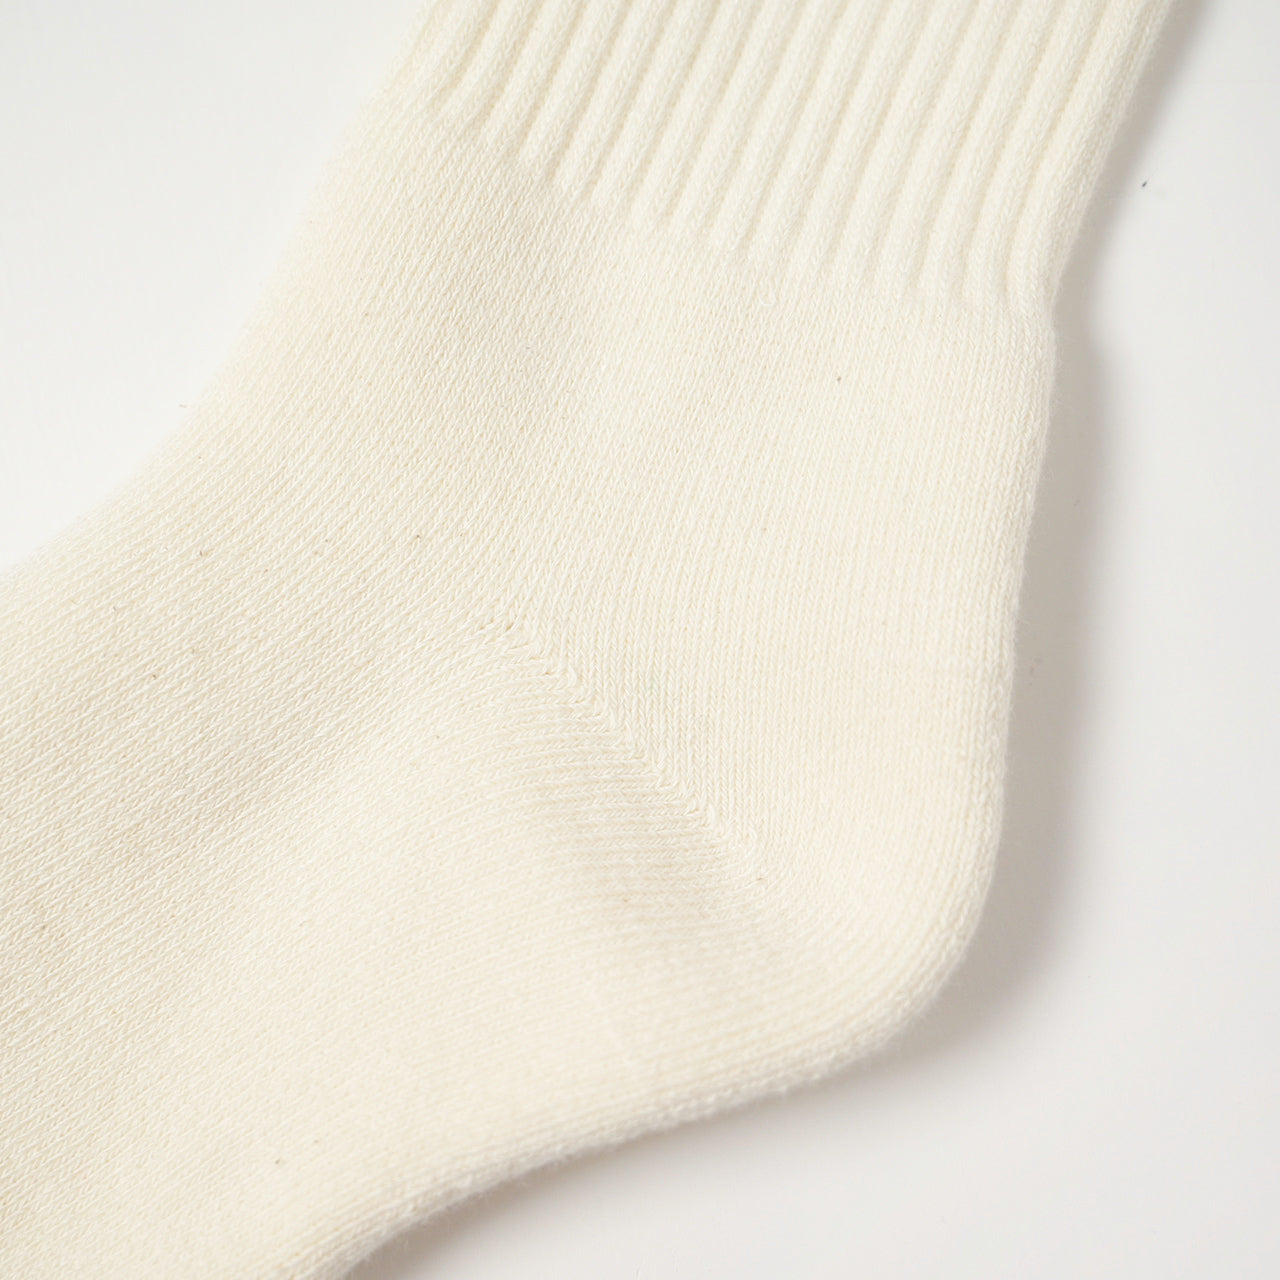 decka Quality socks デカクオリティソックス スケーター ソックス 靴下 80`s Skater Socks de-40 【メール便可】